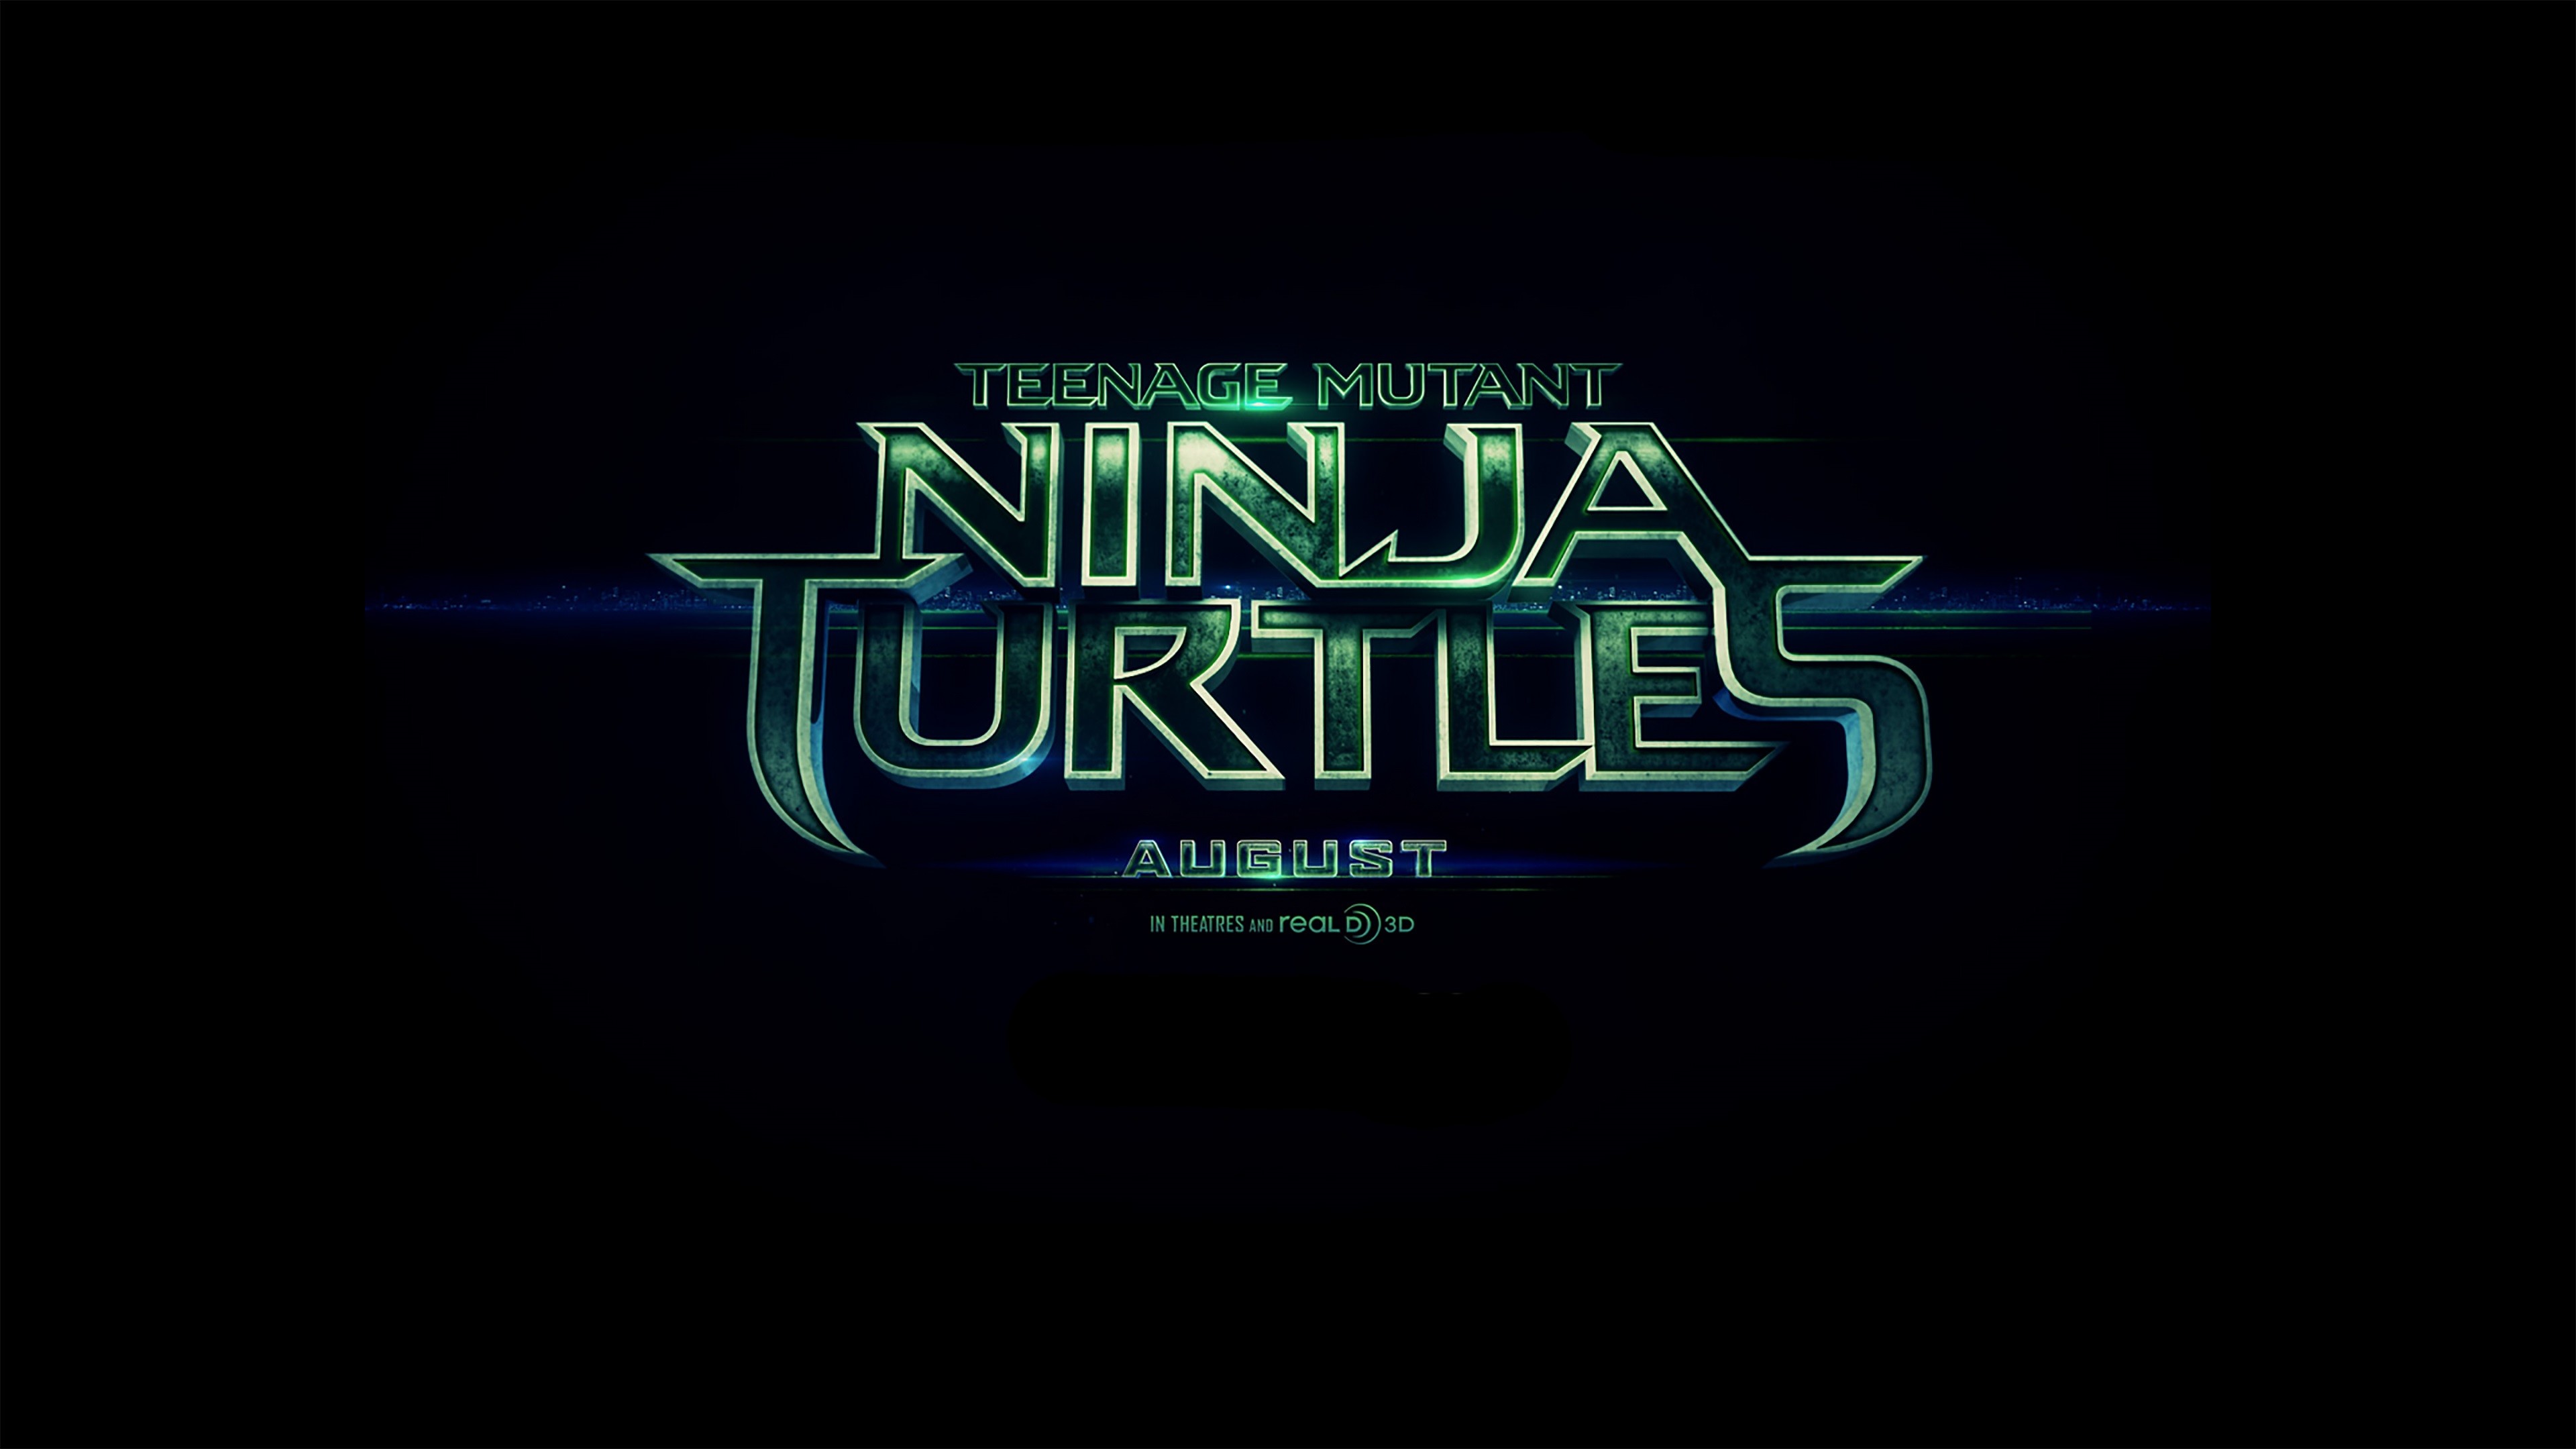 4K HD Wallpaper: Teenage Mutant Ninja Turtles 2014